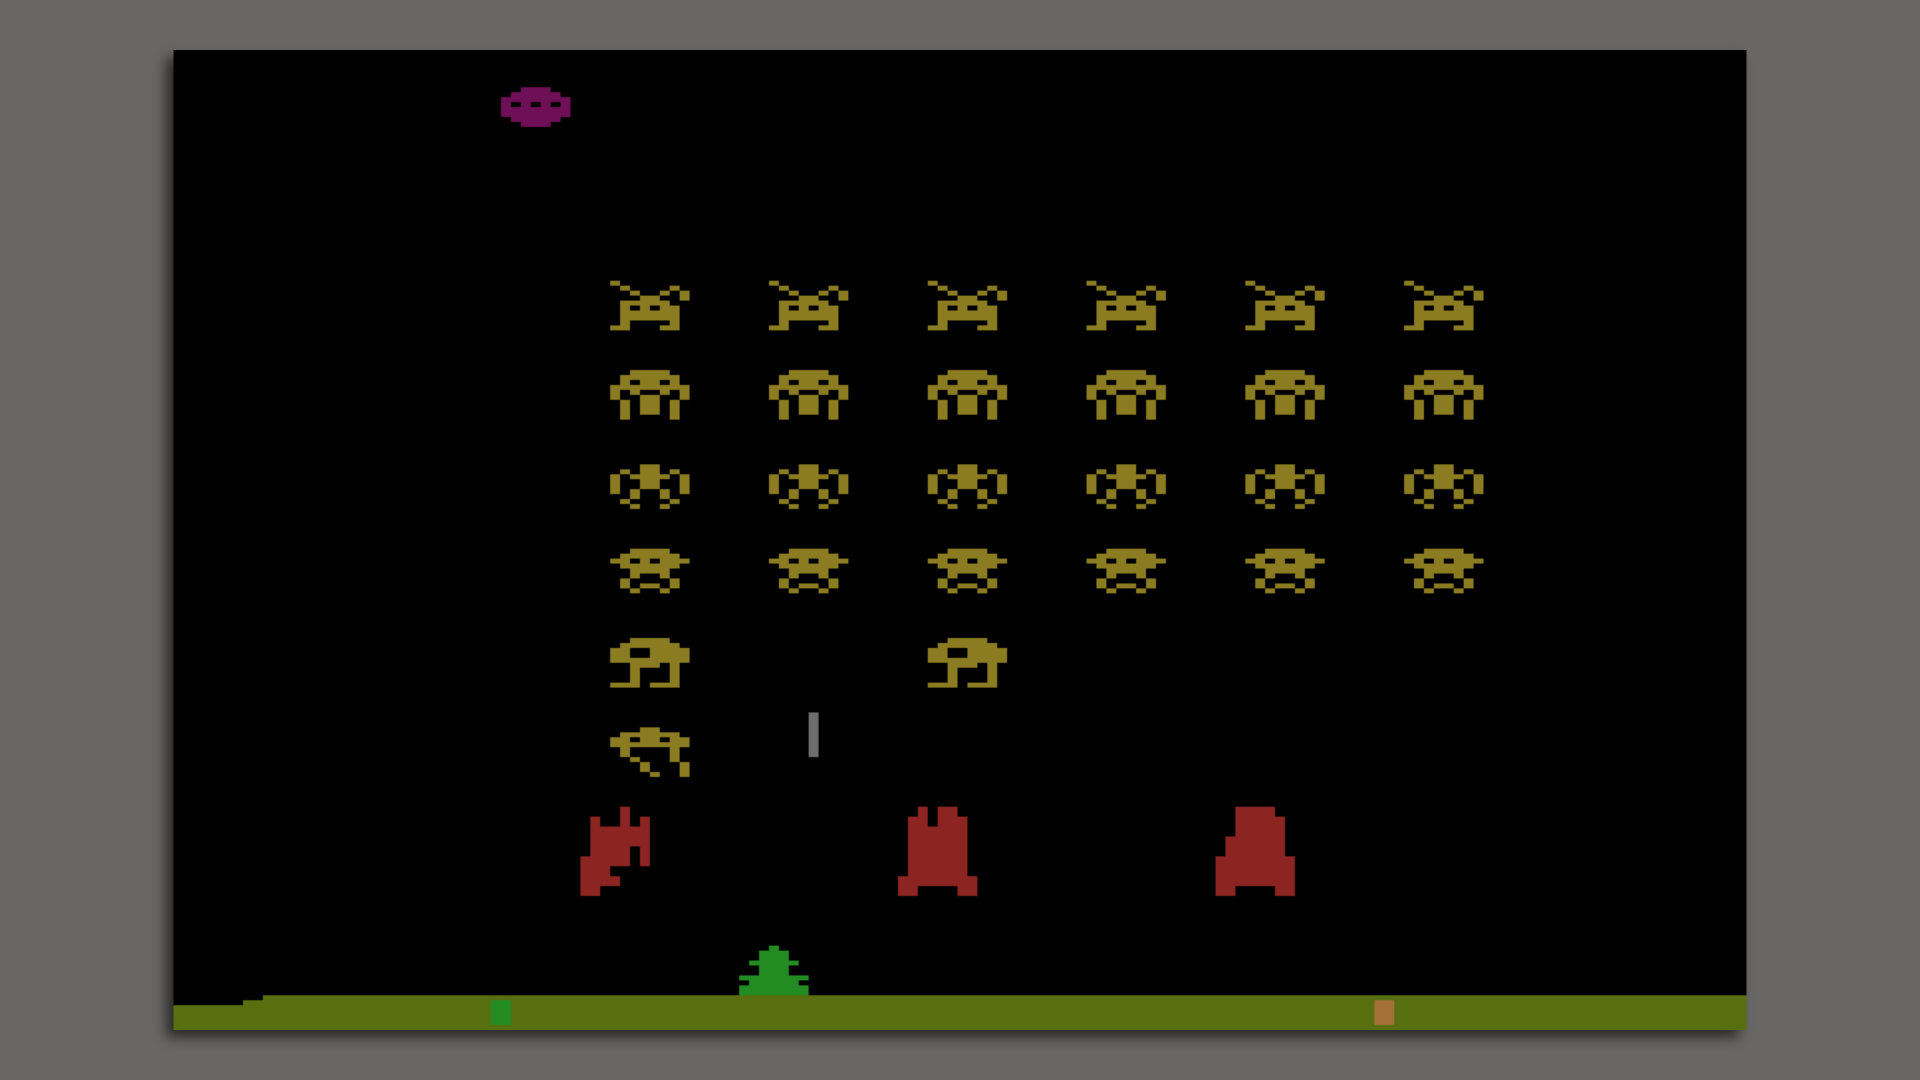 Video game screenshot of a blocky spaceship shooting upward at yellow aliens